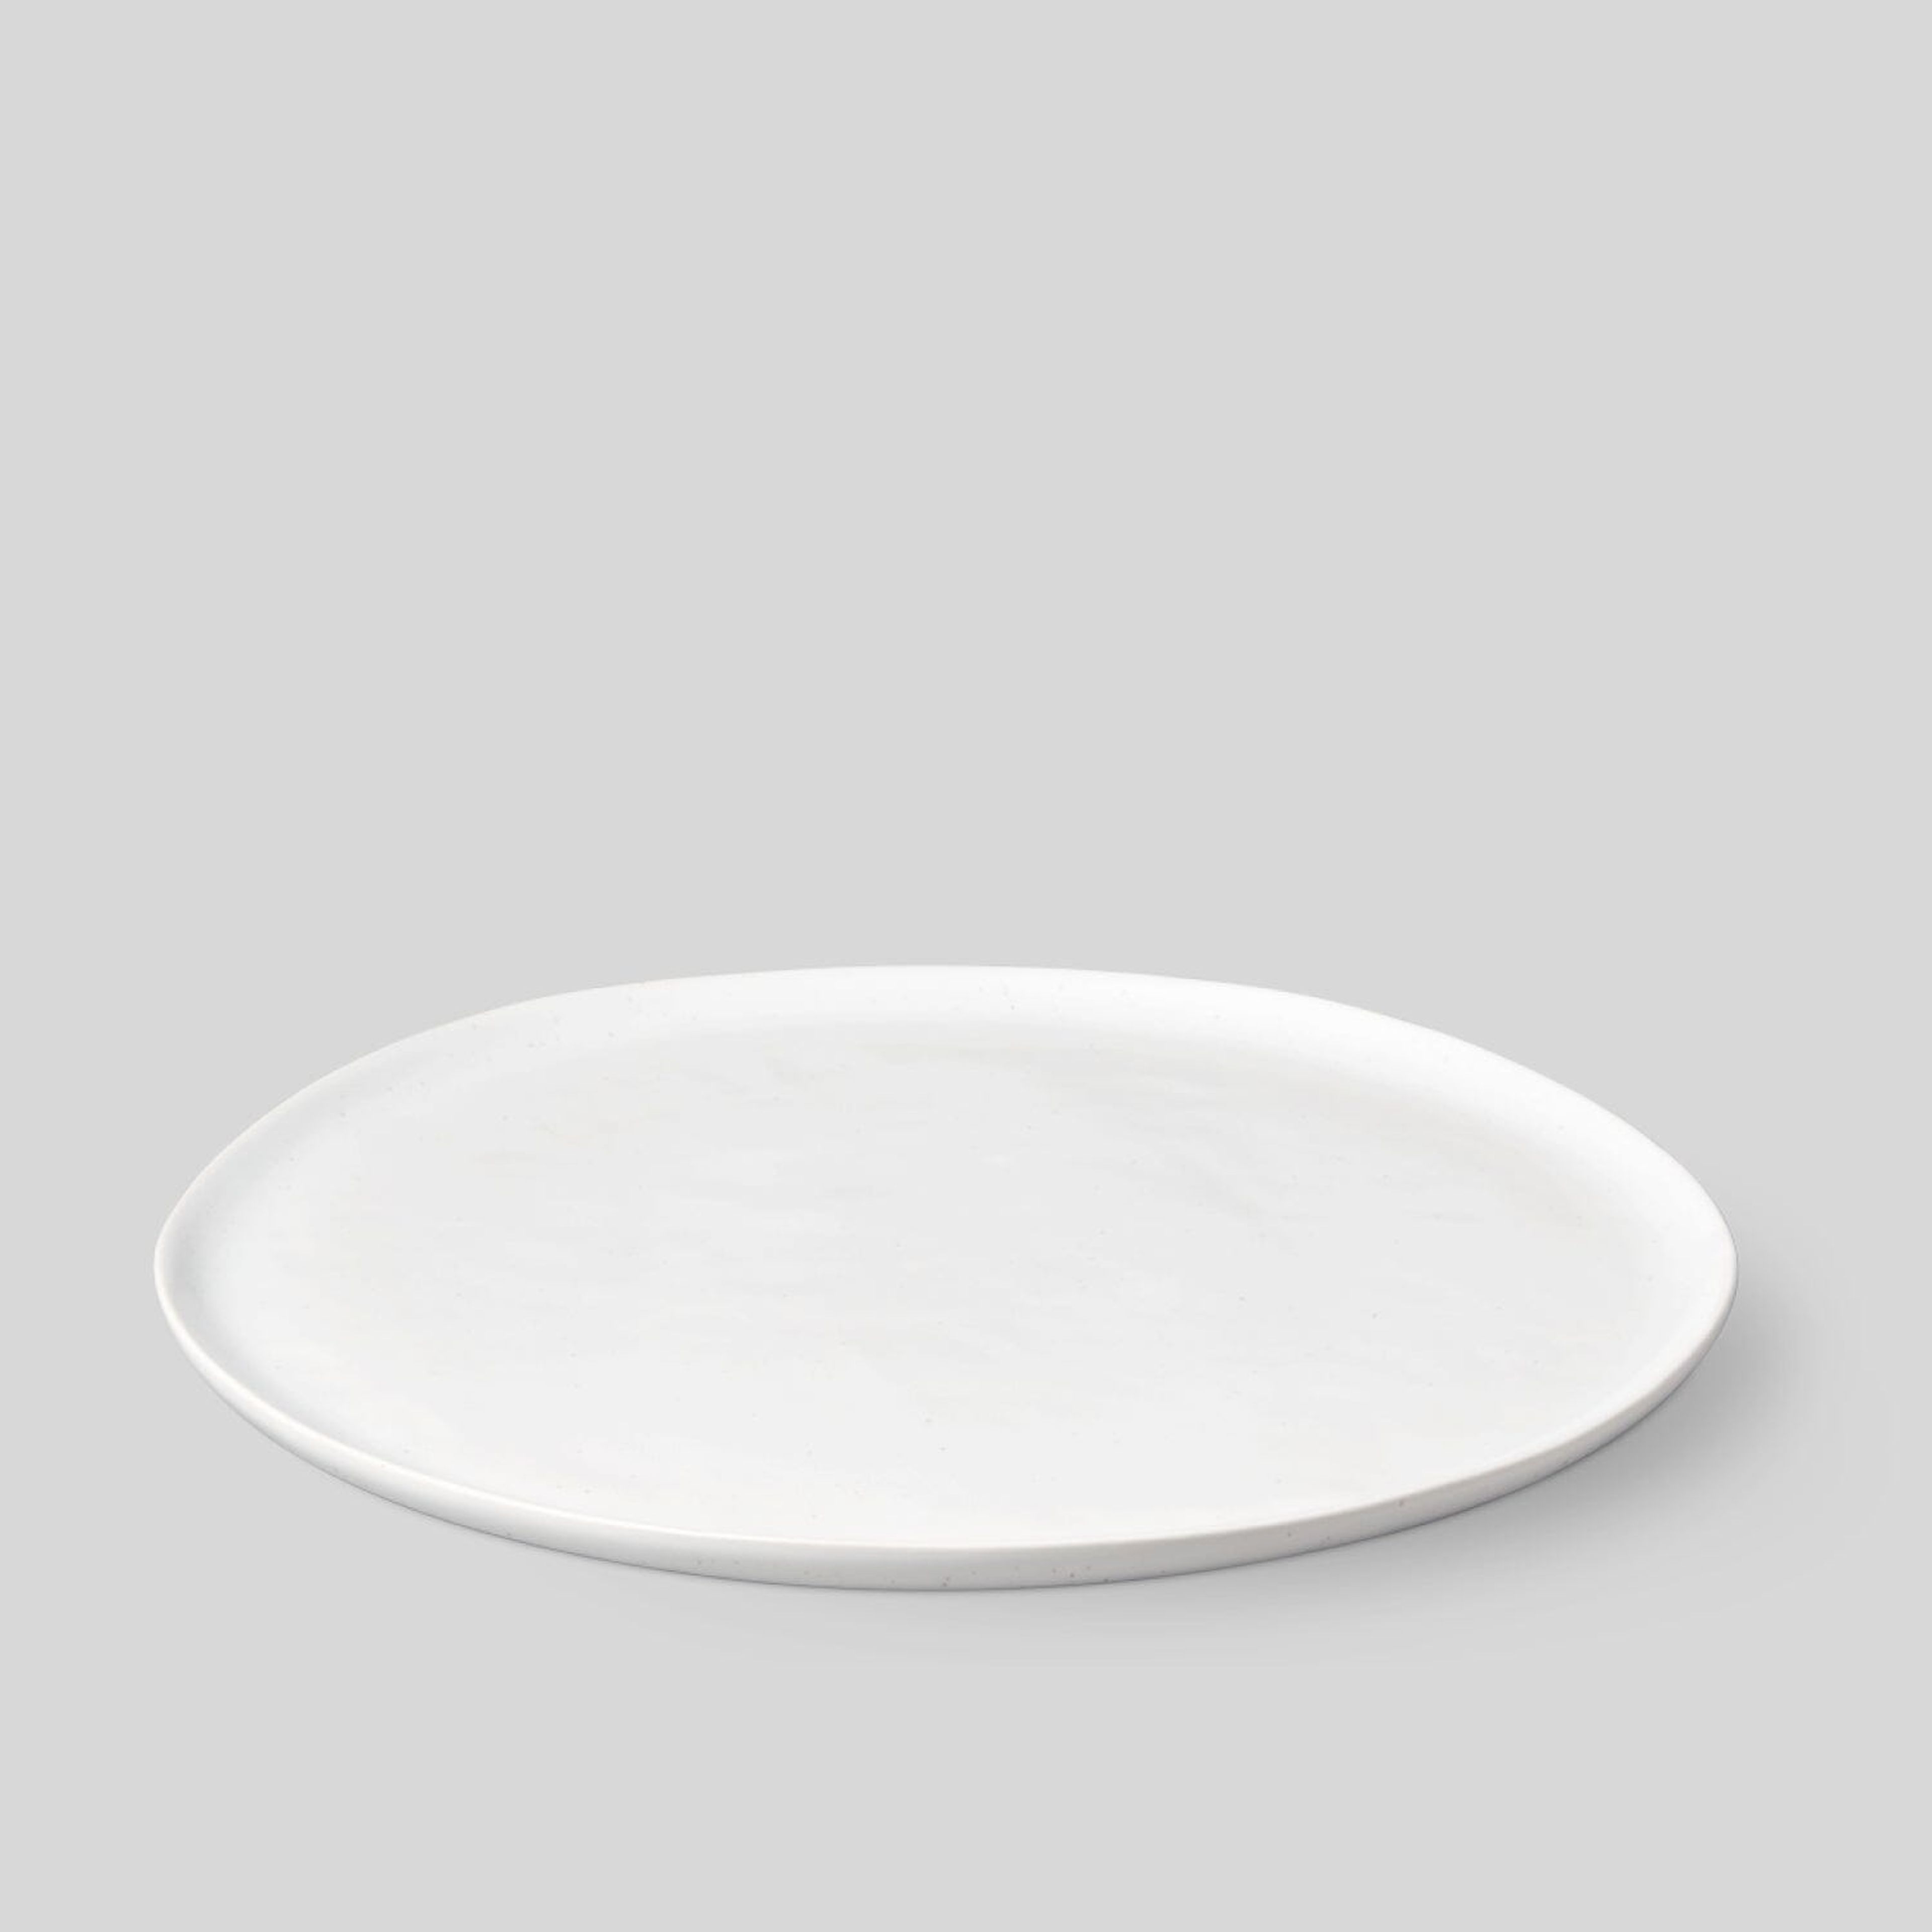 The Serving Platter